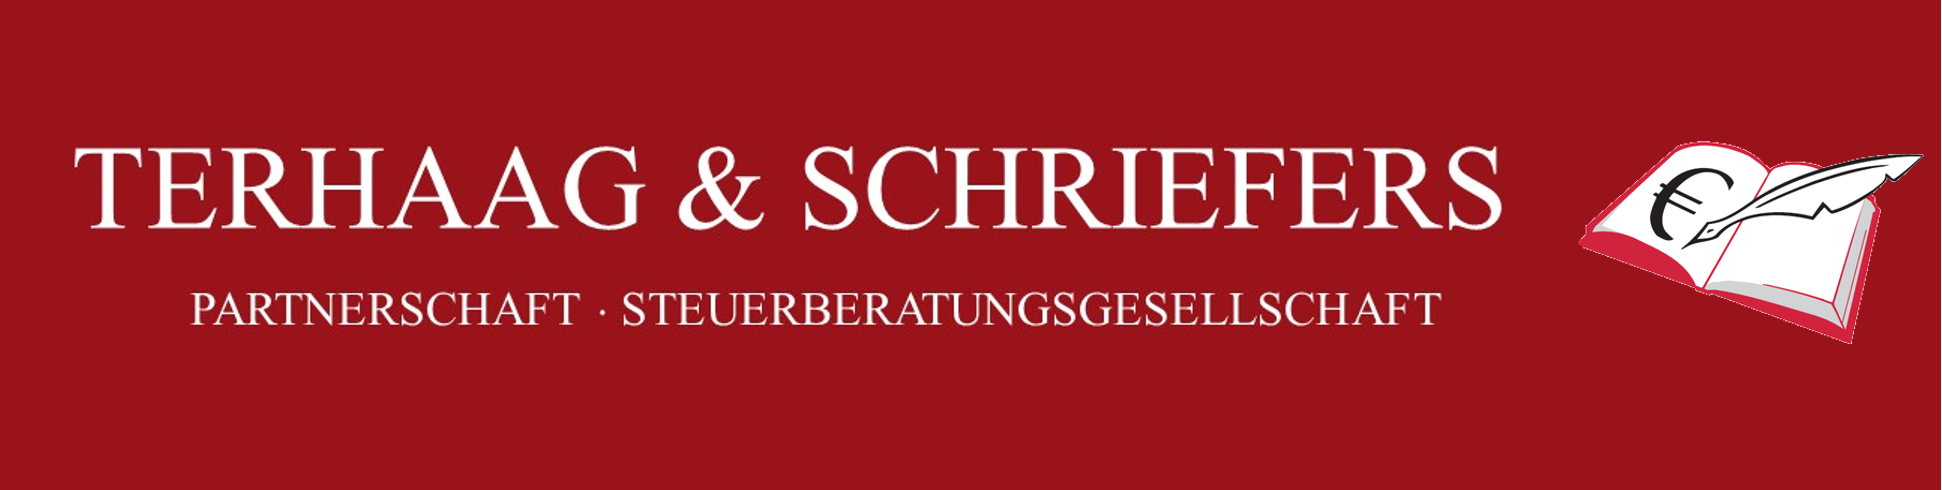 Terhaag & Schriefers